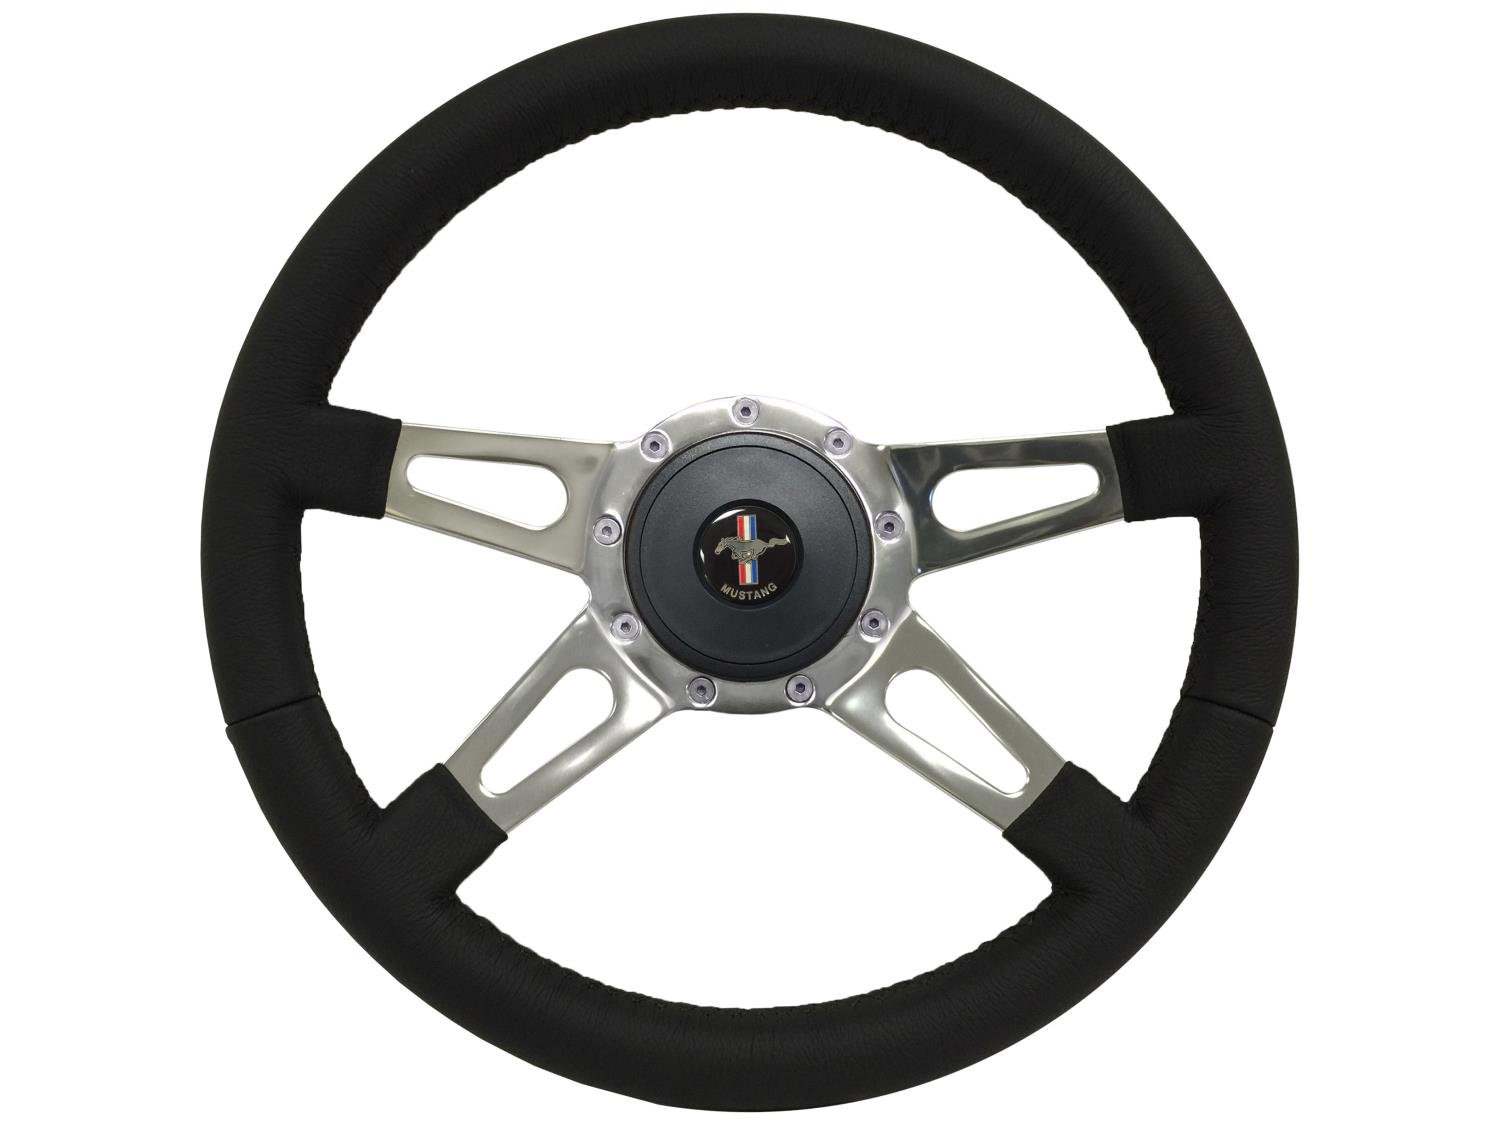 S9 Sport Steering Wheel Kit 1968-1991 Ford/Mercury, 14 in. Diameter, Premium Black Leather Grip, w/ 9-Bolt Adapter & Horn Button